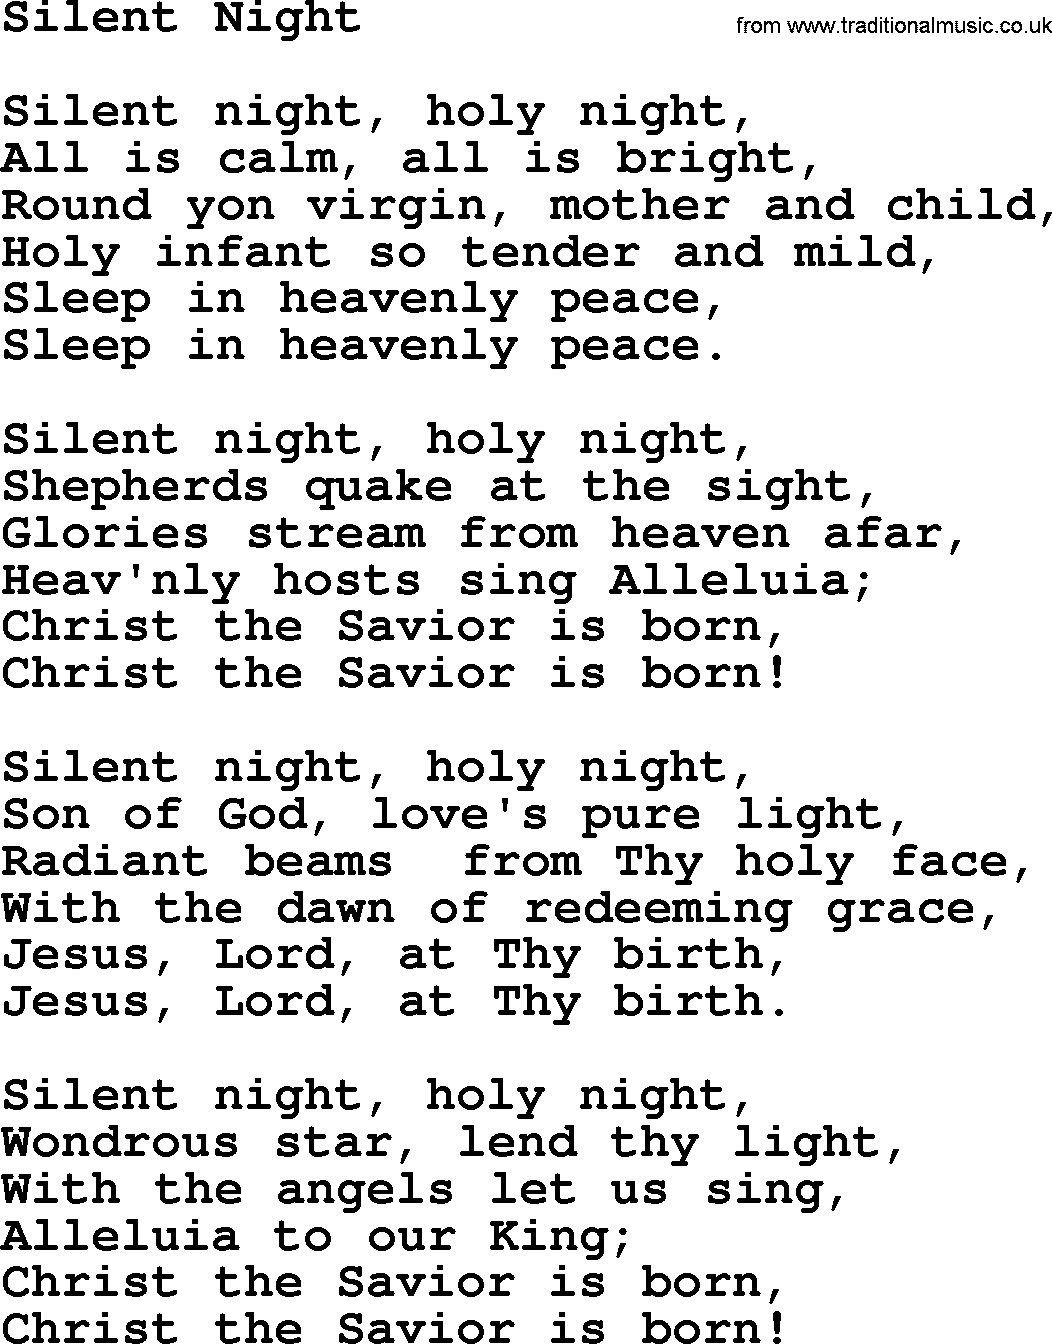 baptist-hymnal-christian-song-silent-night-lyrics-with-pdf-for-printing